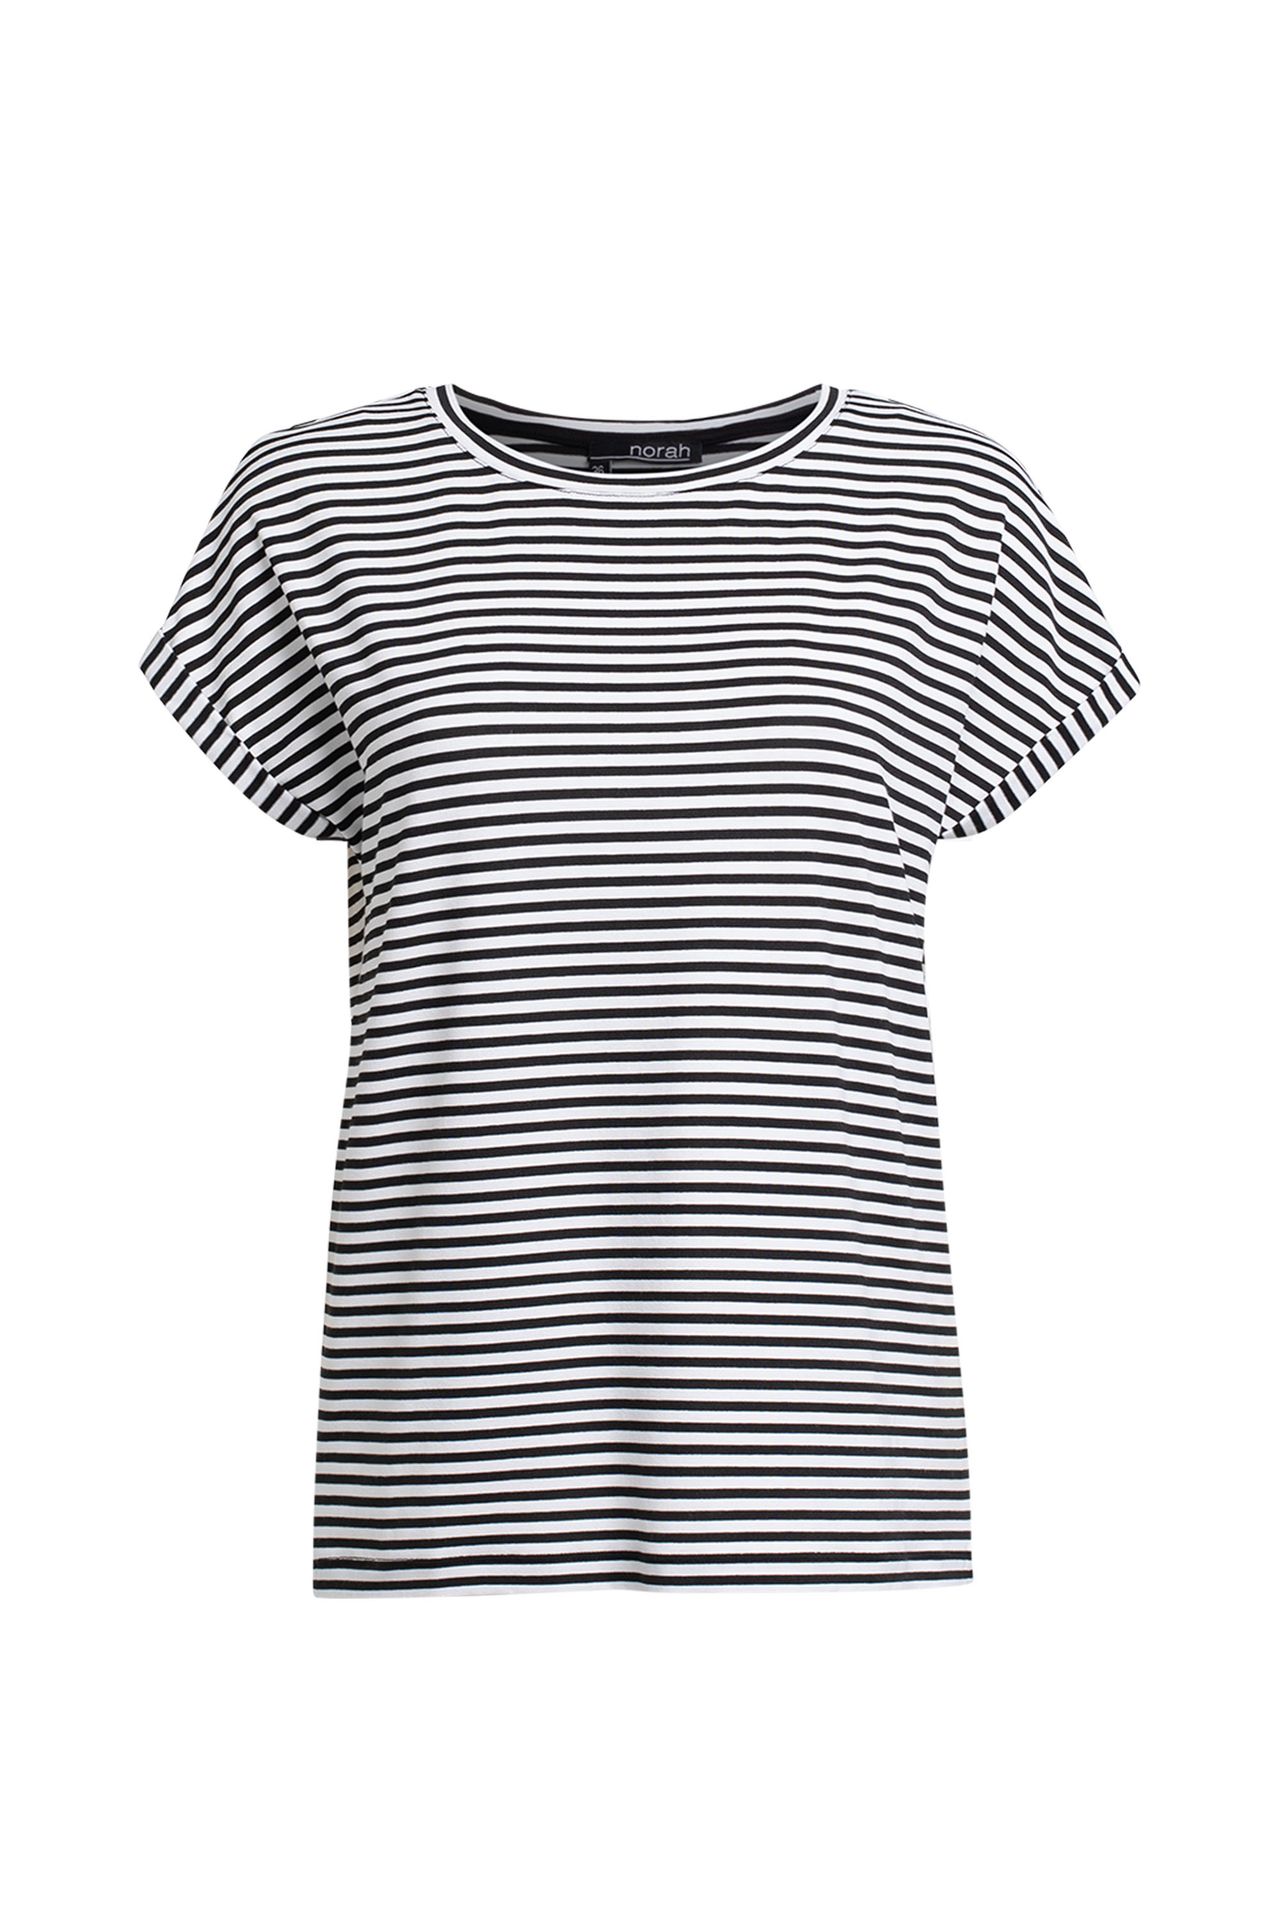 Norah Gestreept shirt black/white 210993-031